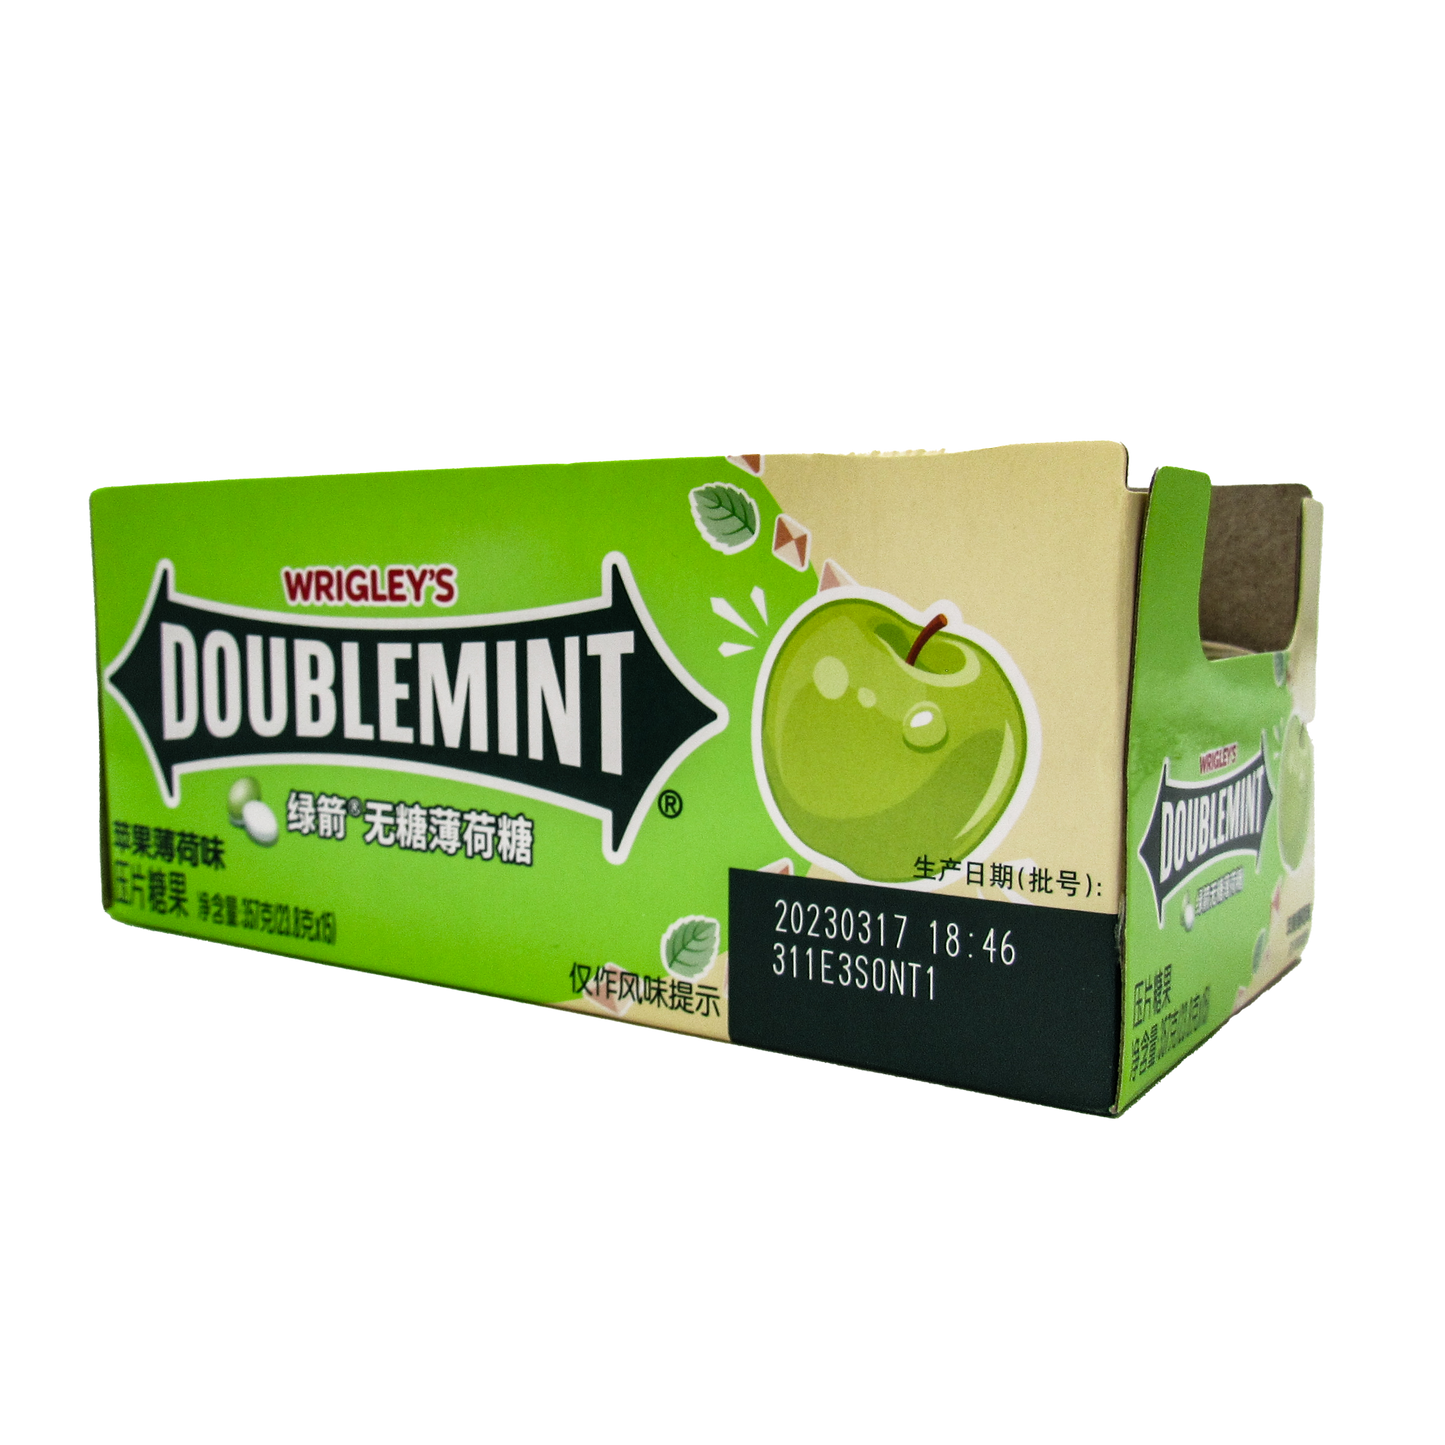 DoubleMint - Sugar Free Mints Apple Mint 15pk